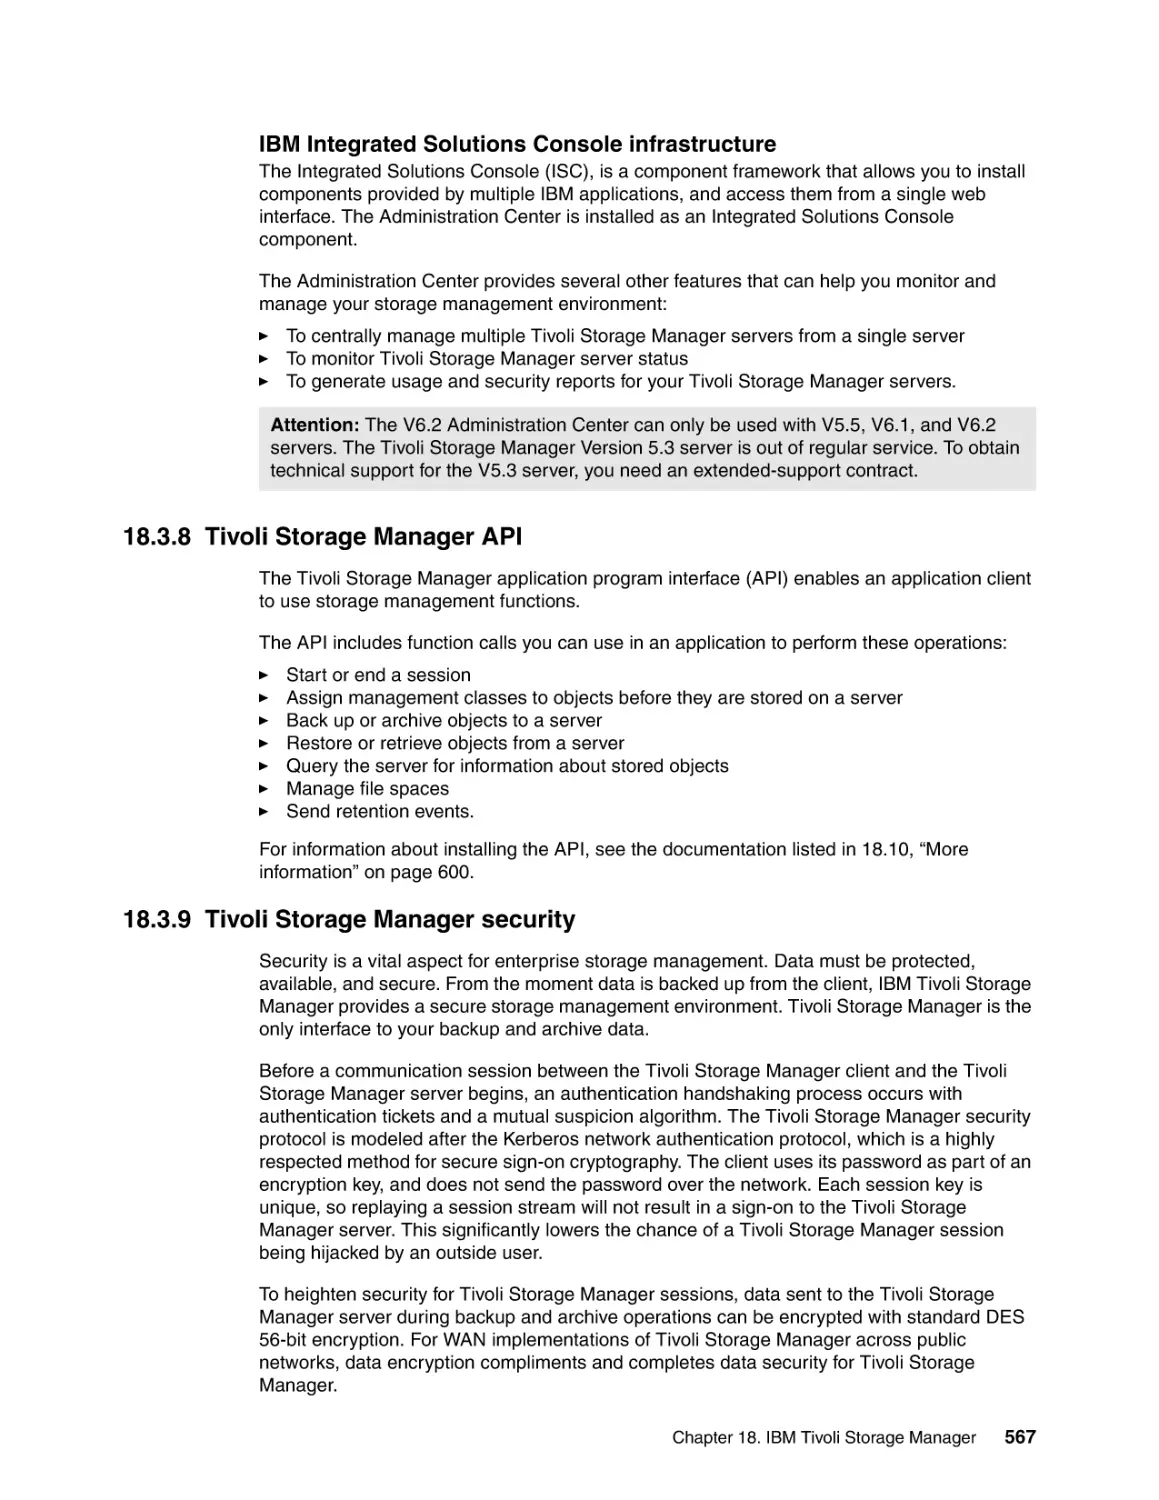 18.3.8 Tivoli Storage Manager API
18.3.9 Tivoli Storage Manager security